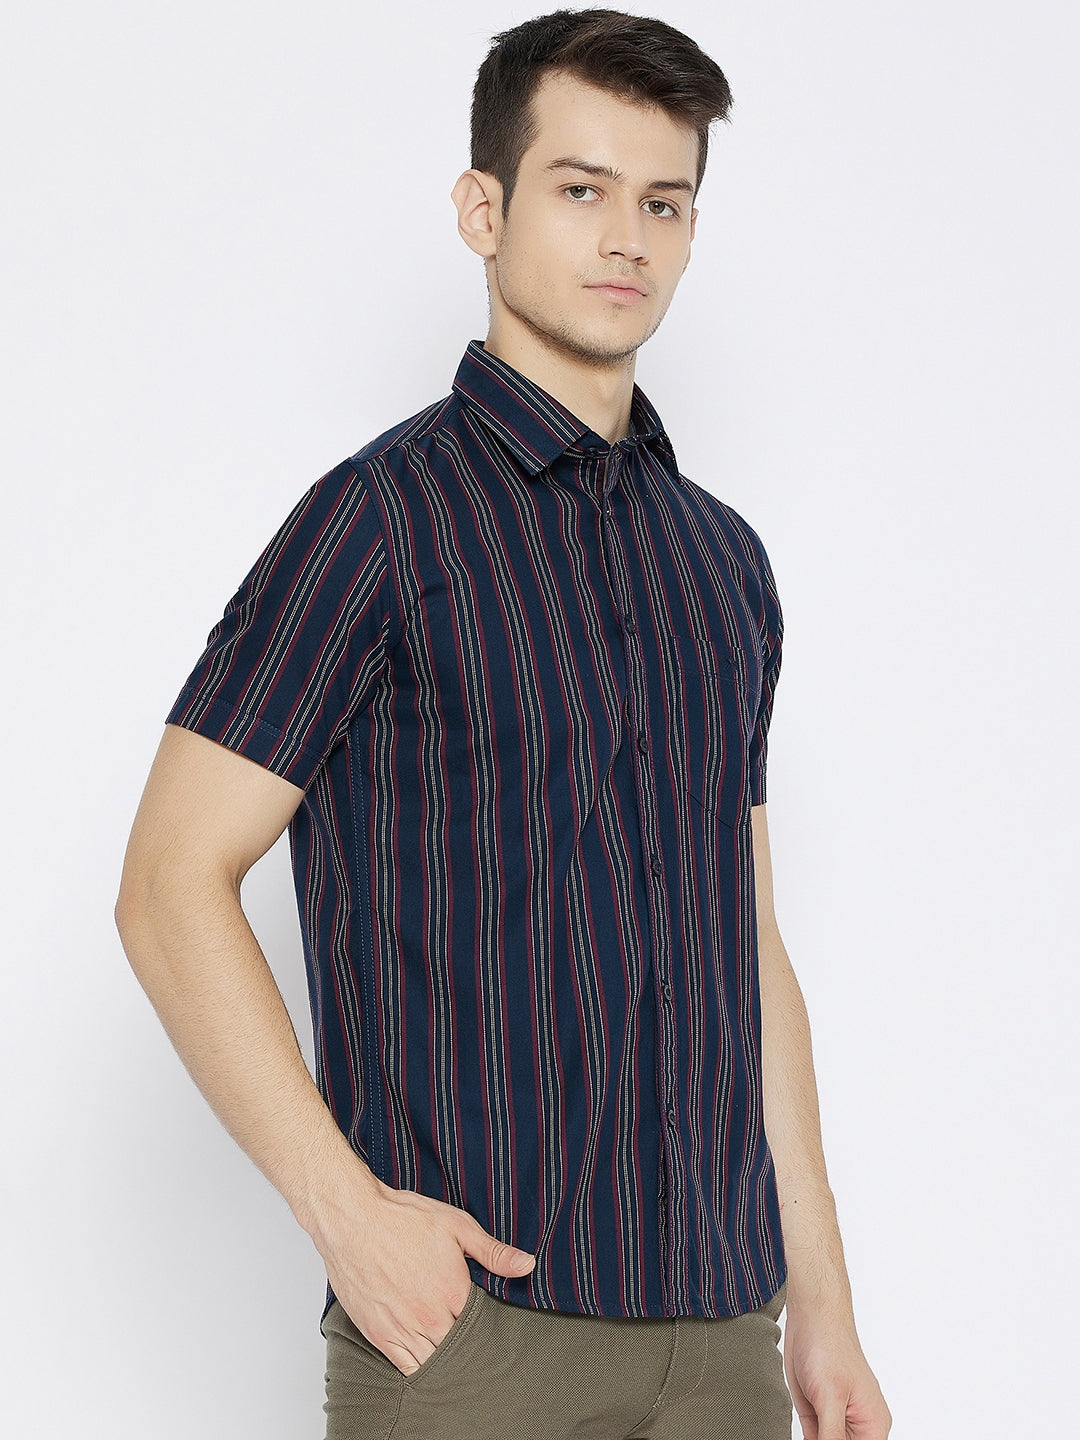 Navy Blue Striped Slim Fit shirt - Men Shirts